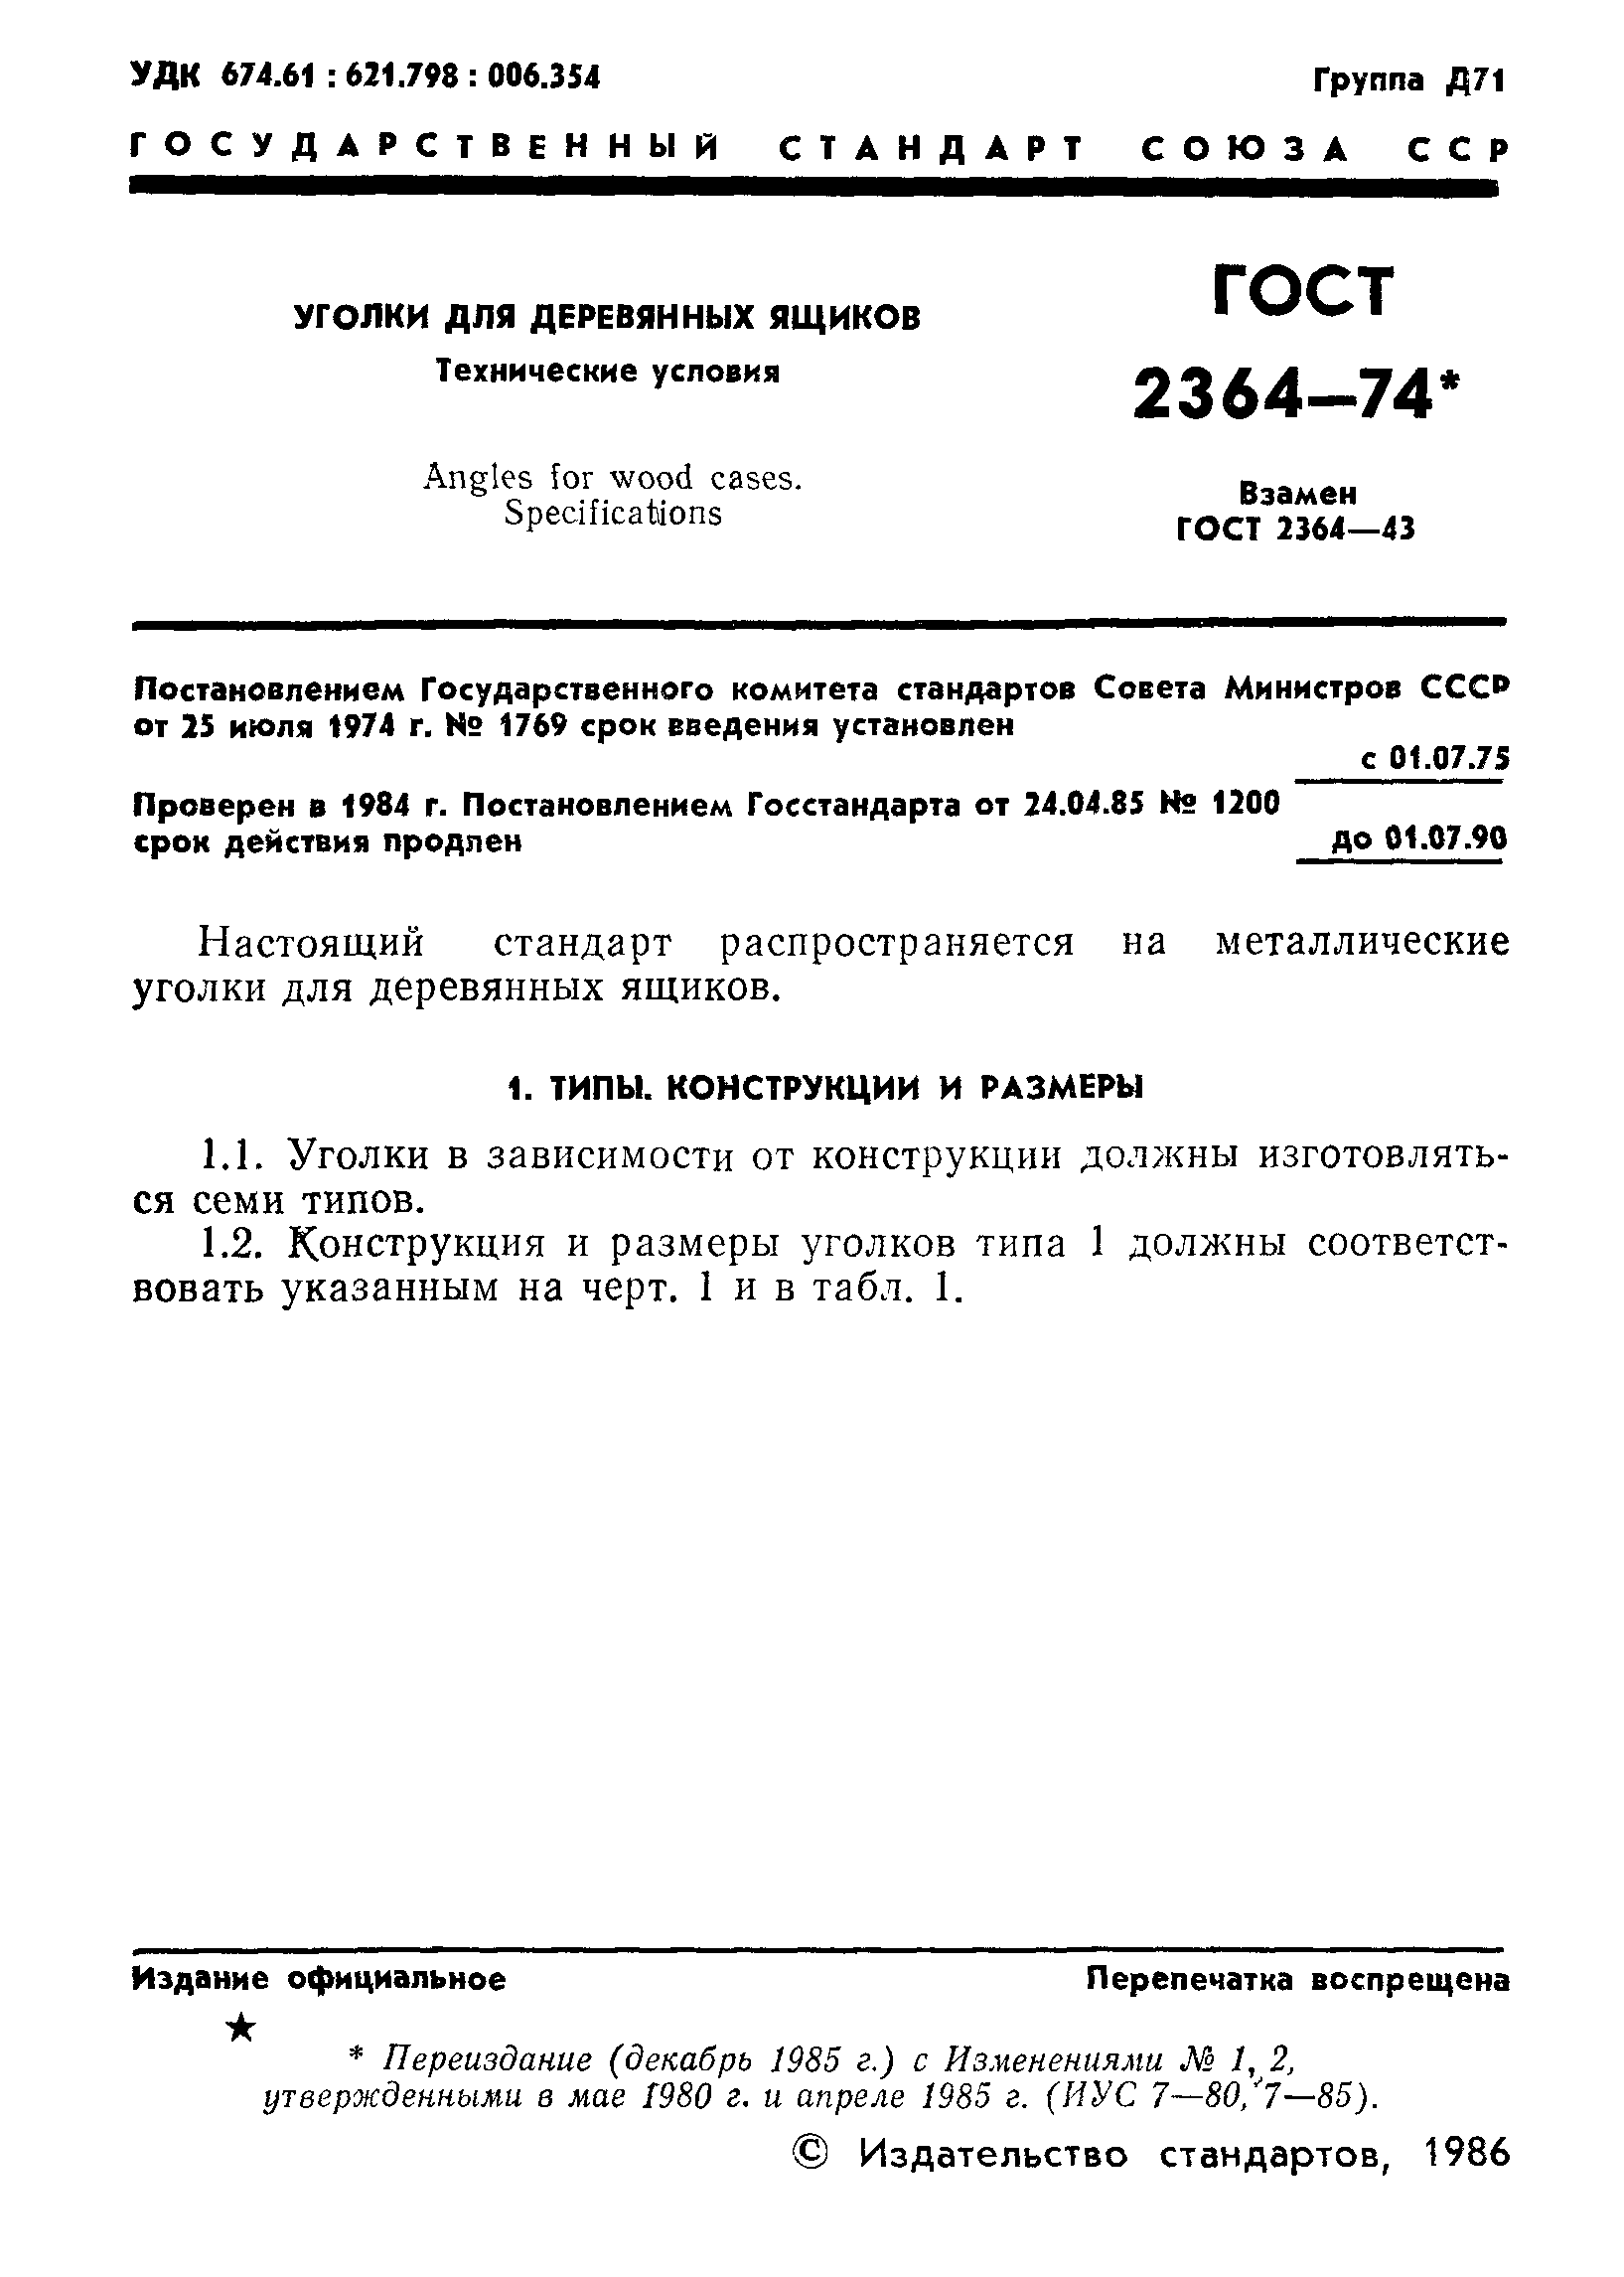 ГОСТ 2364-74